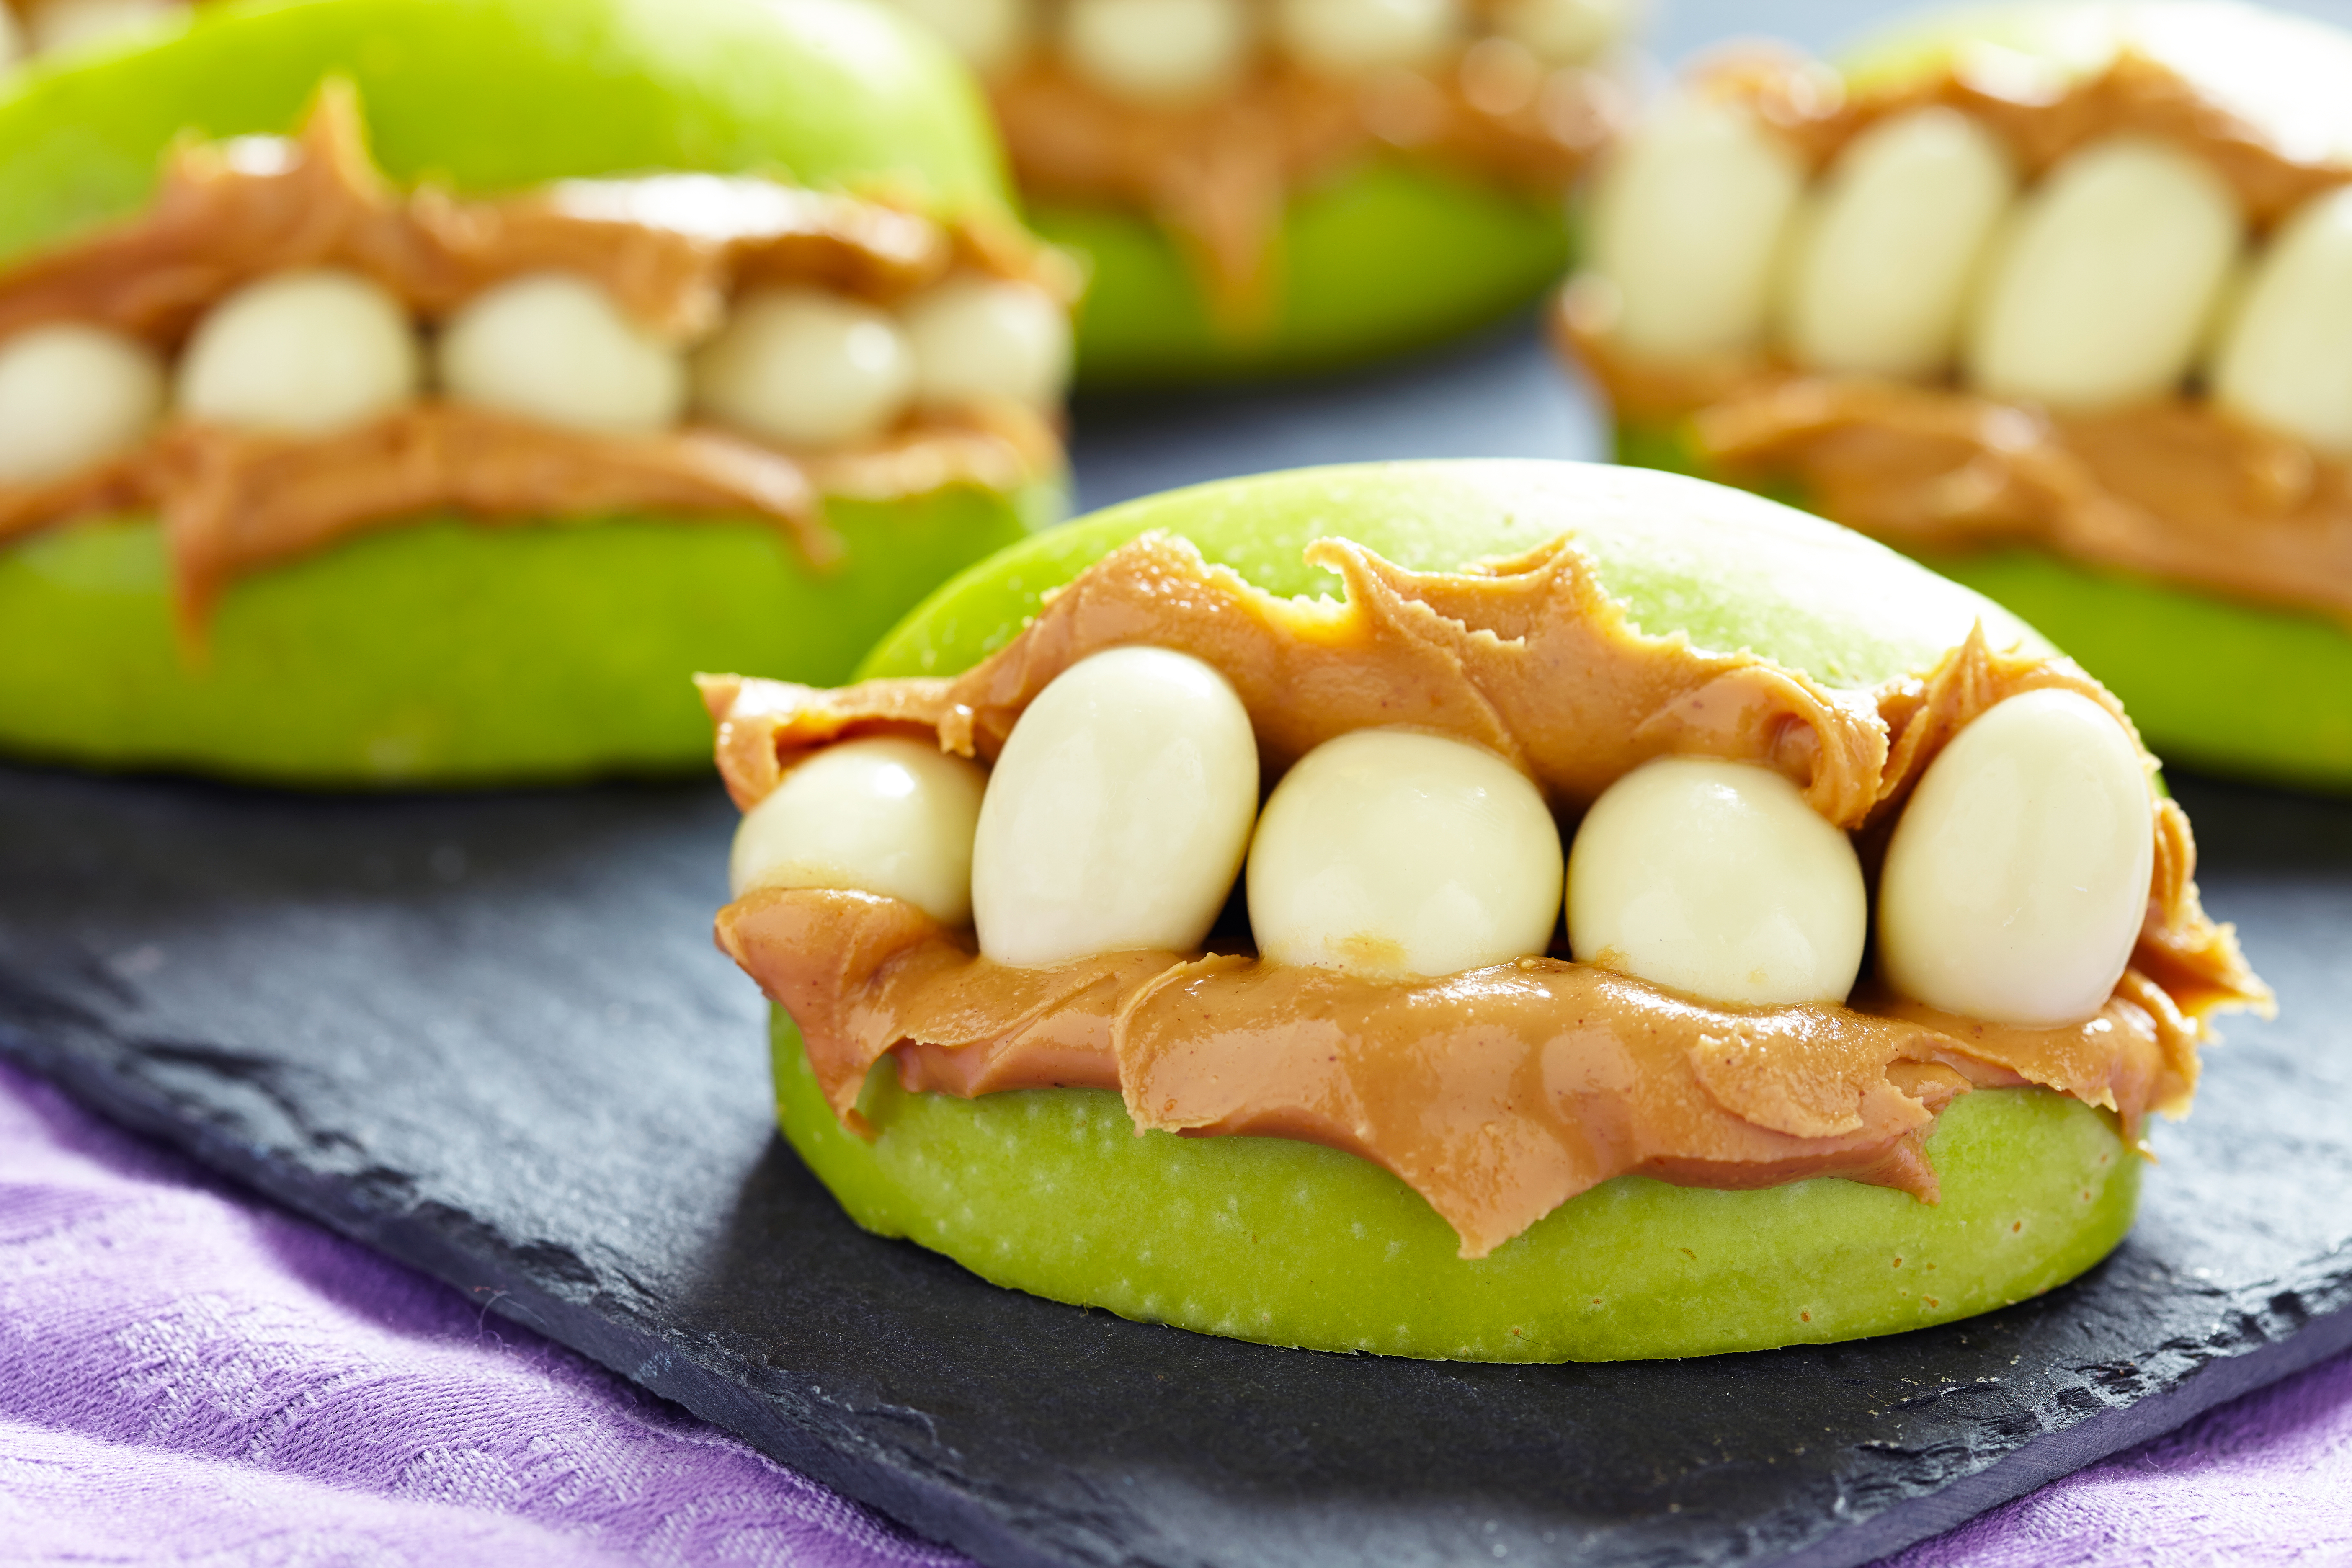 Peanut butter and yogurt covered raisins between green apple slices.